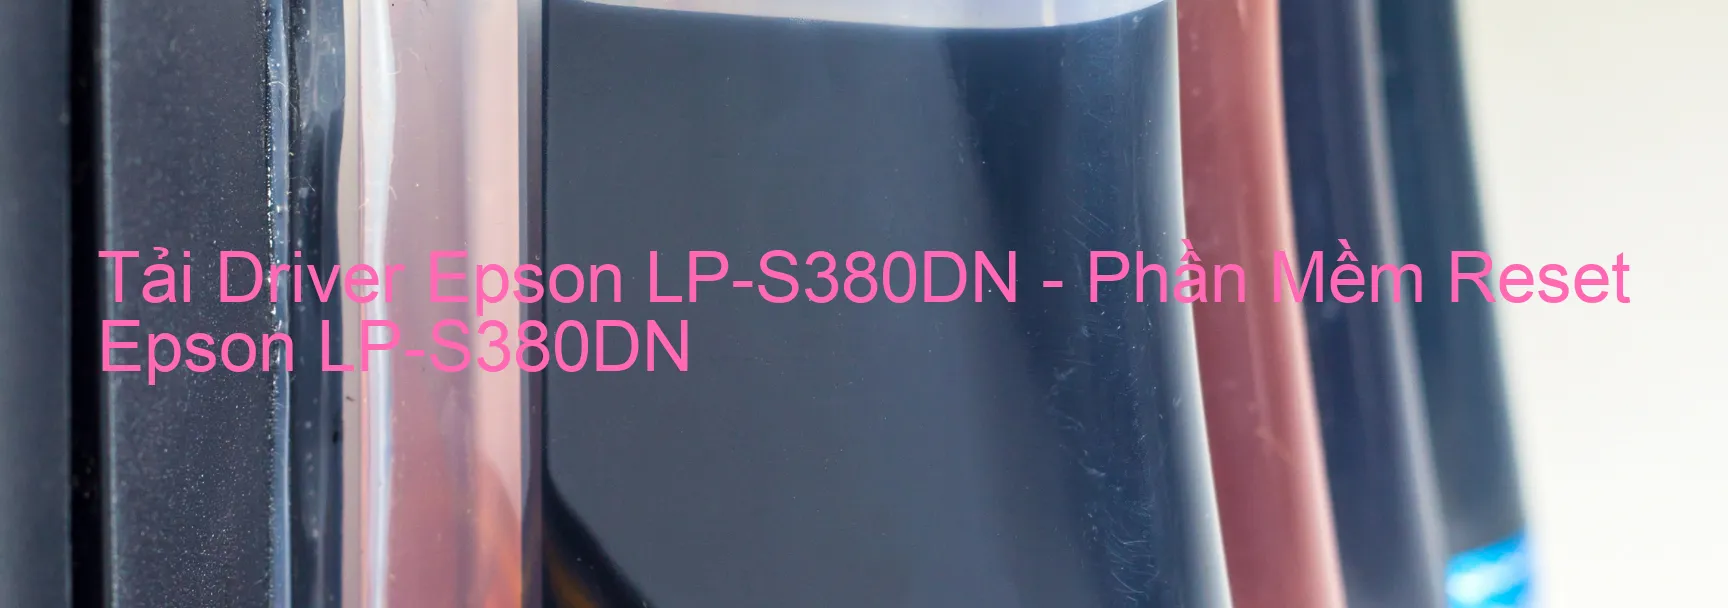 Driver Epson LP-S380DN, Phần Mềm Reset Epson LP-S380DN